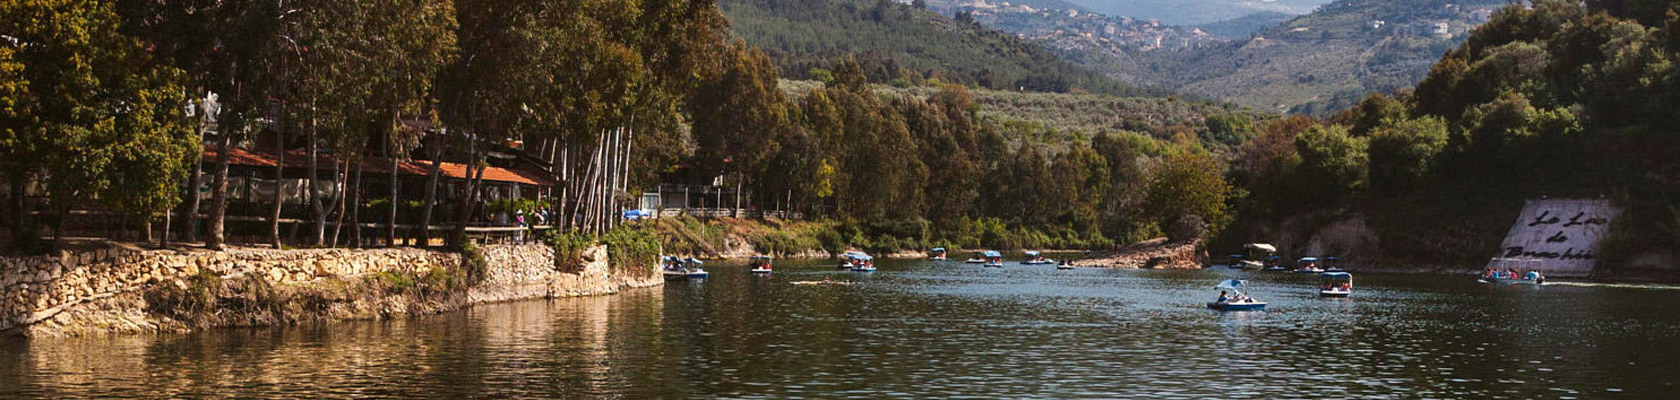 Bnachii Lake Zgharta